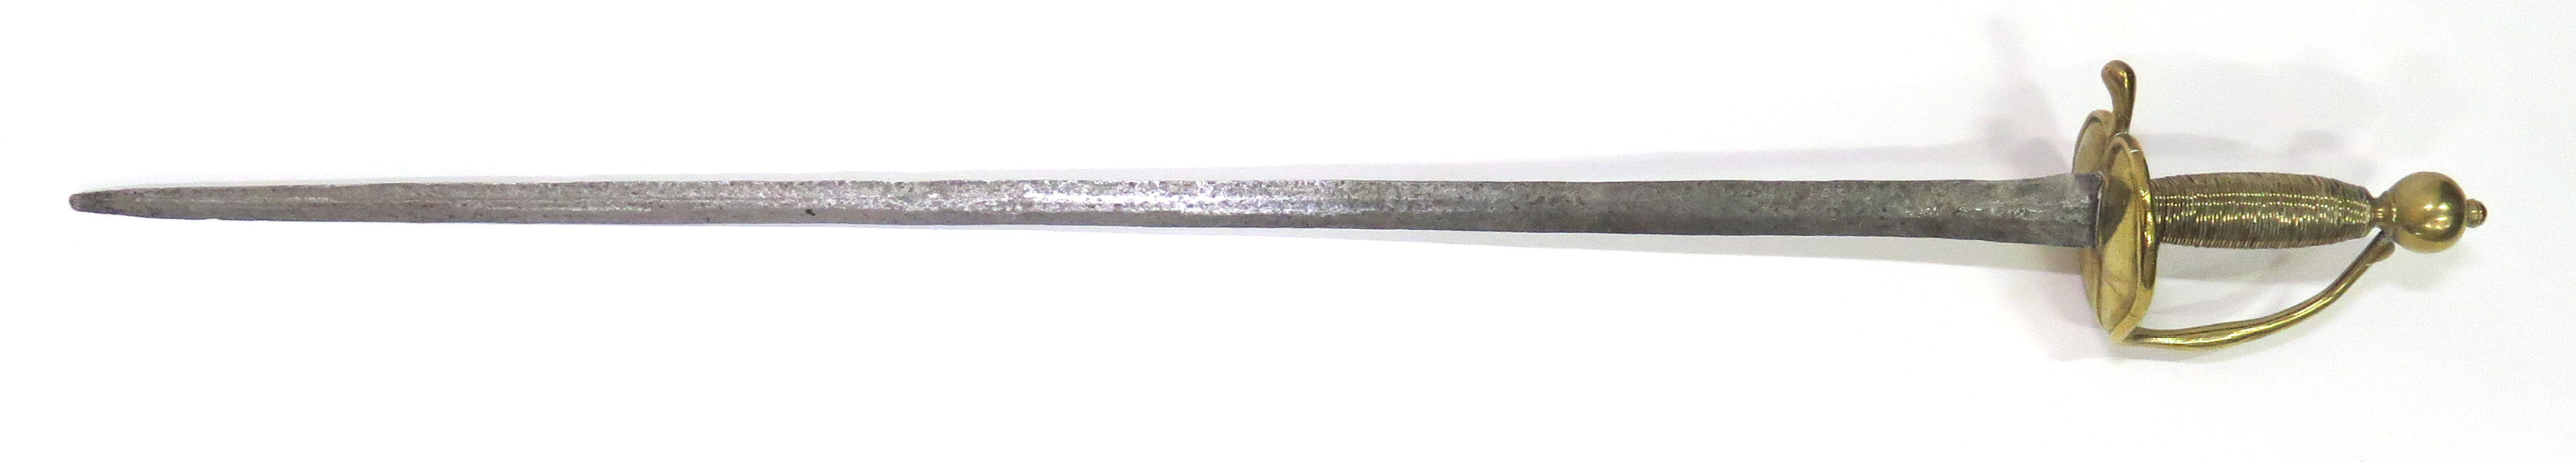 Värja, mässingsfäste med dubbeleggad klinga, 17-1800-tal, l 107 cm, _3359a_8d86ad37e8d2209_lg.jpeg